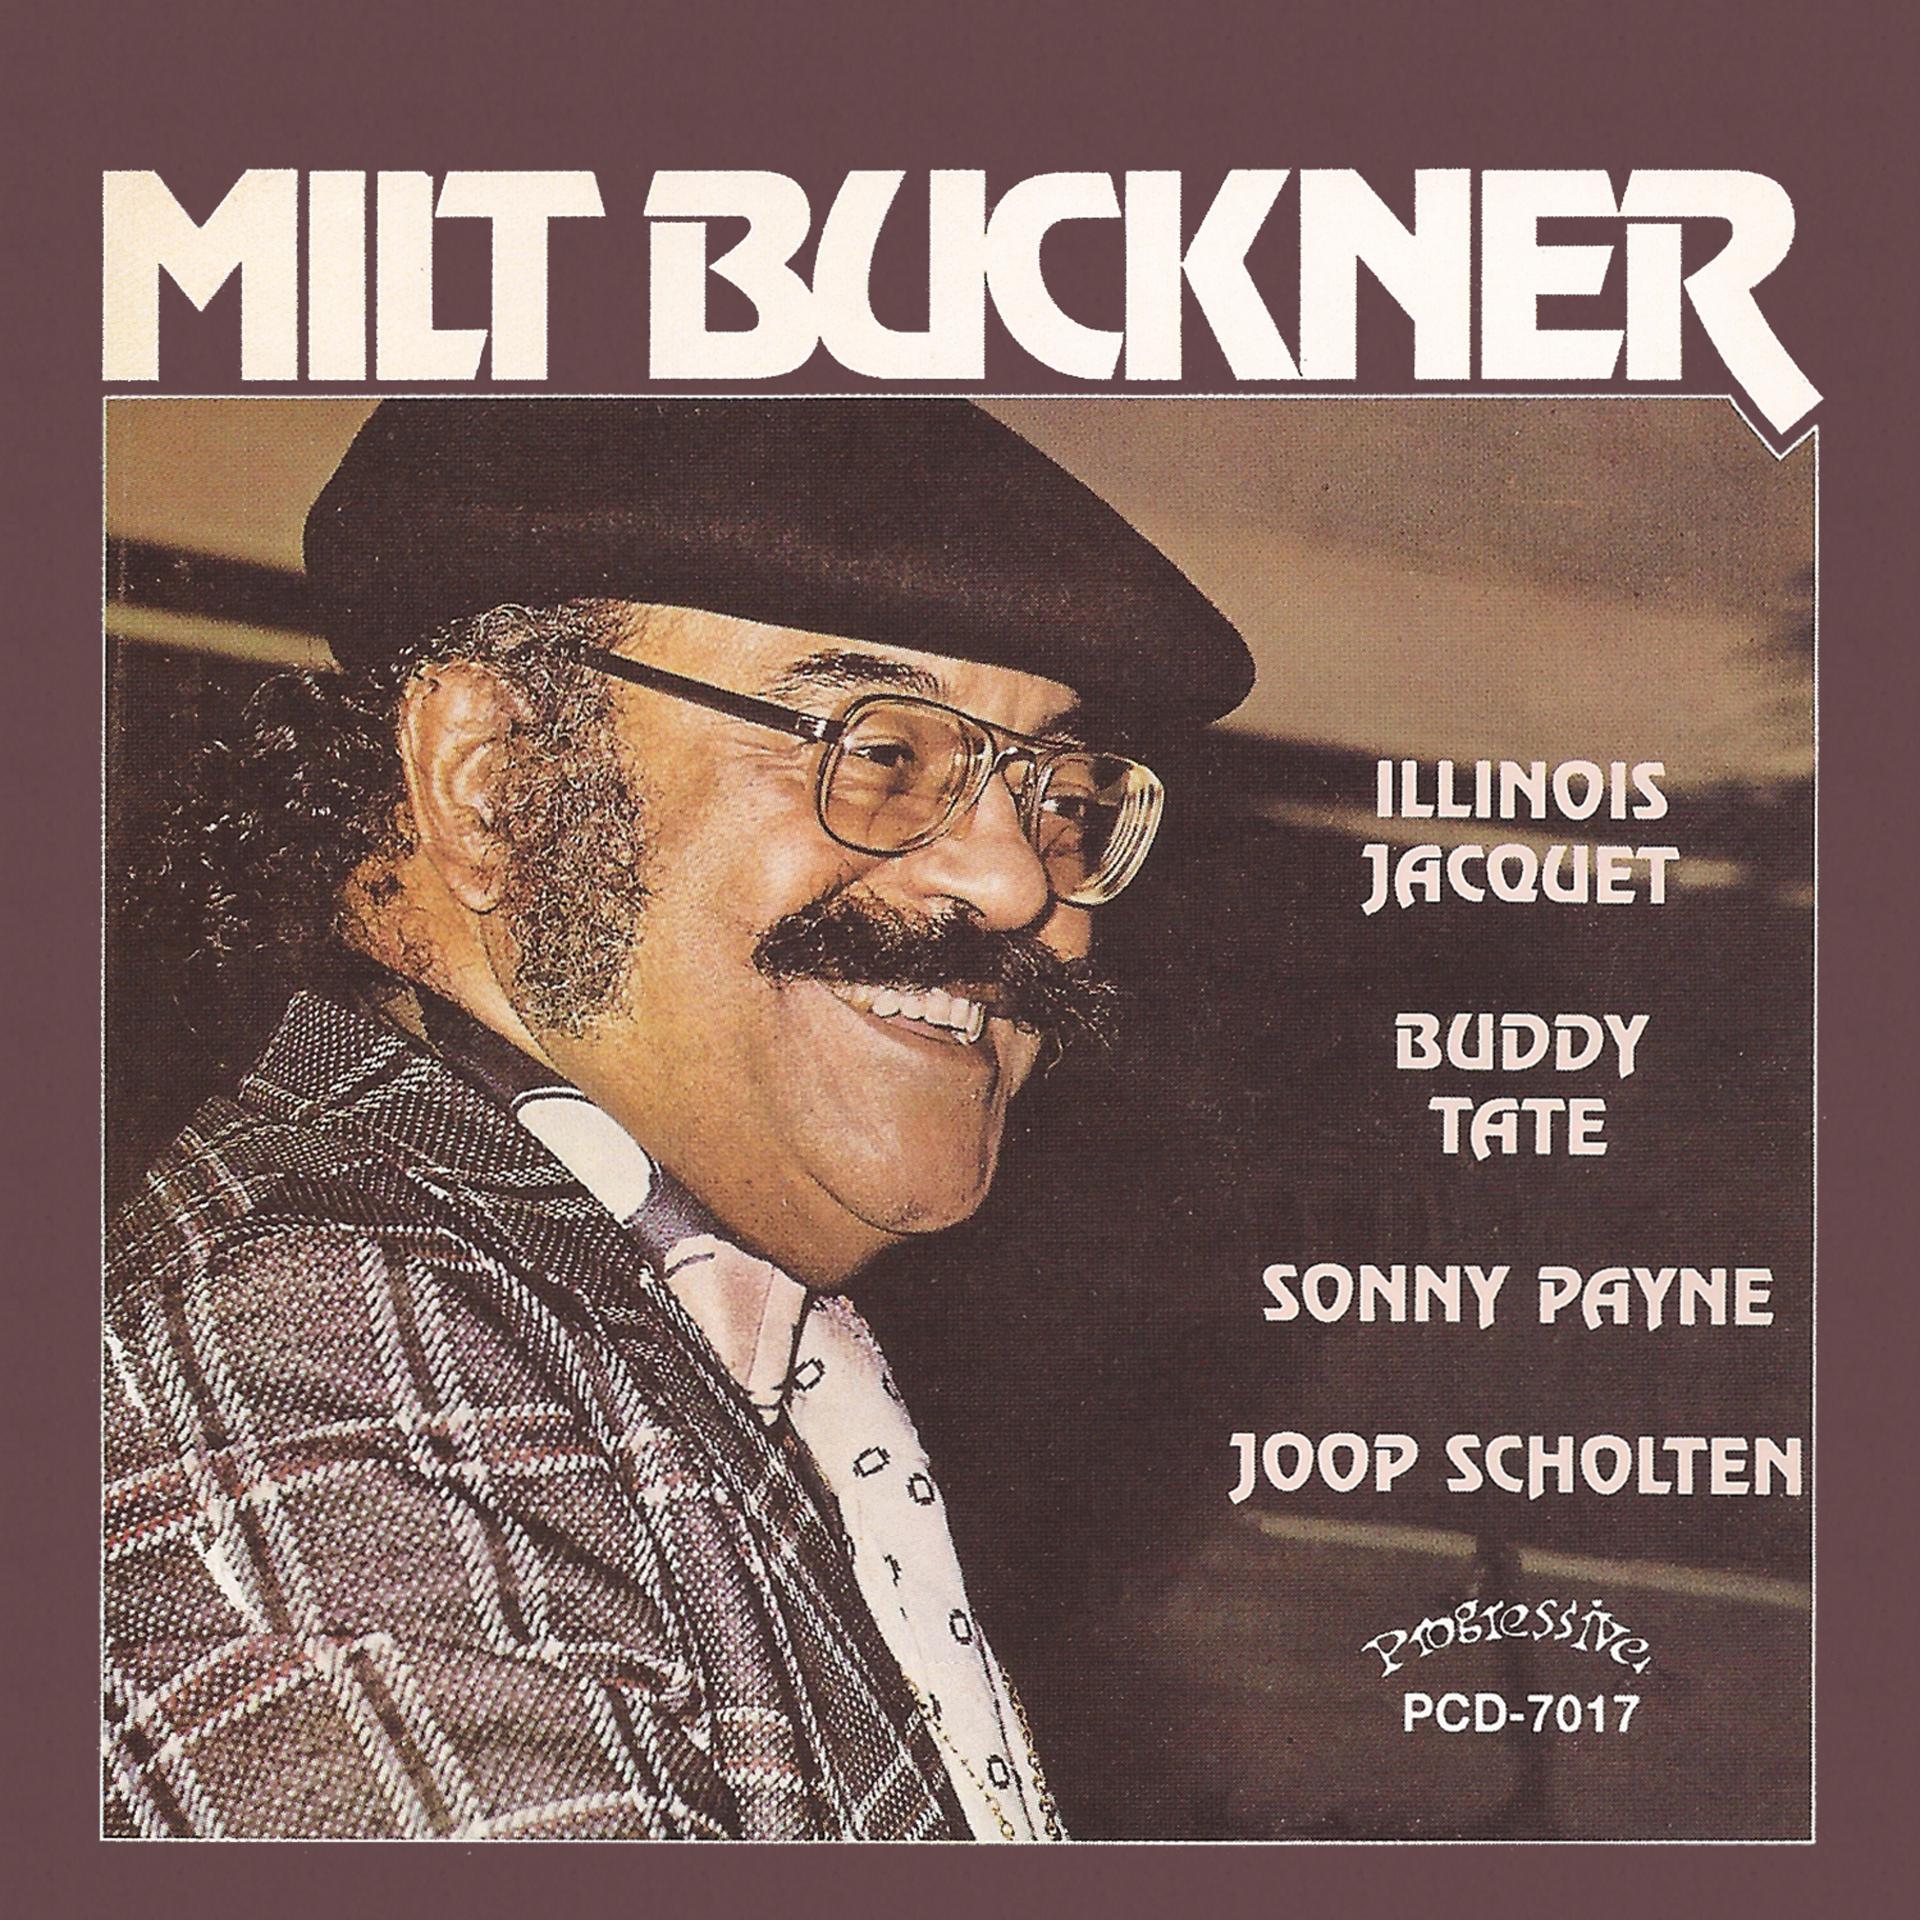 Постер к треку Milt Buckner, Illinois Jacquet, Buddy Tate, Sonny Payne, Joop Scholten - It Could Happen to You